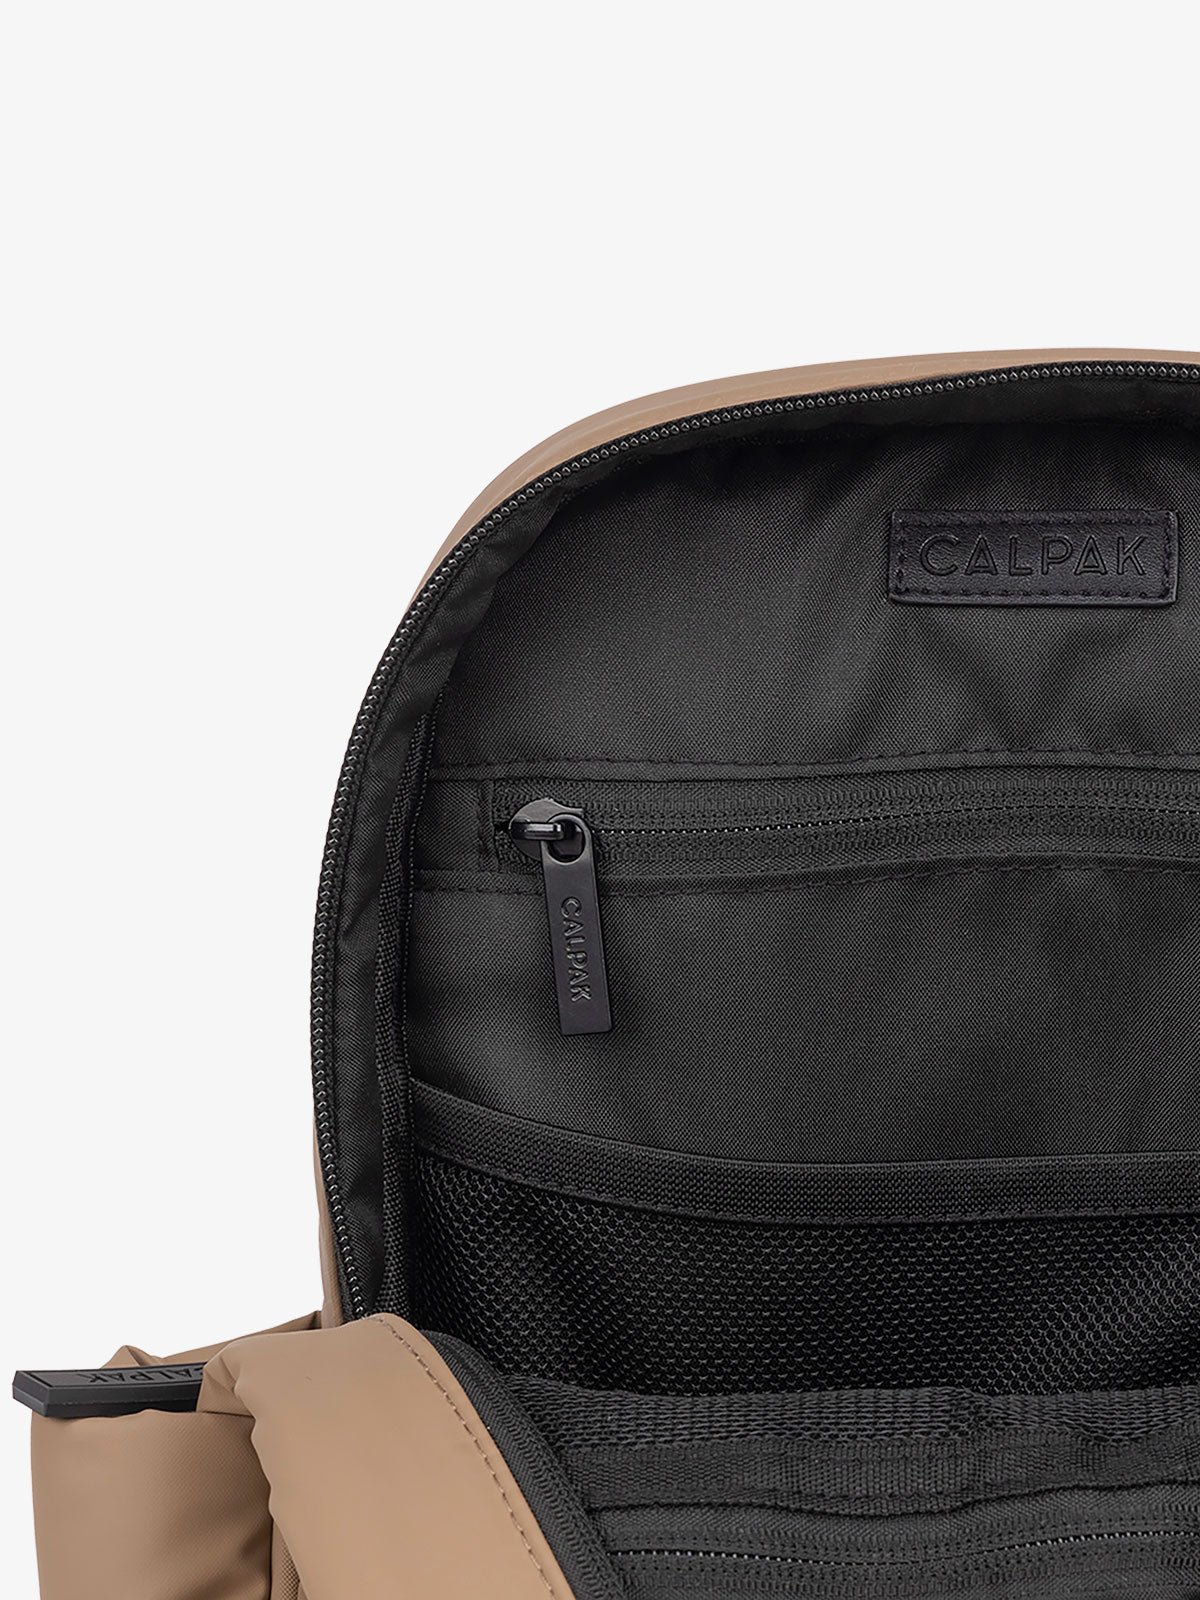 CALPAK Luka Mini Backpack multiple interior pockets in chocolate brown